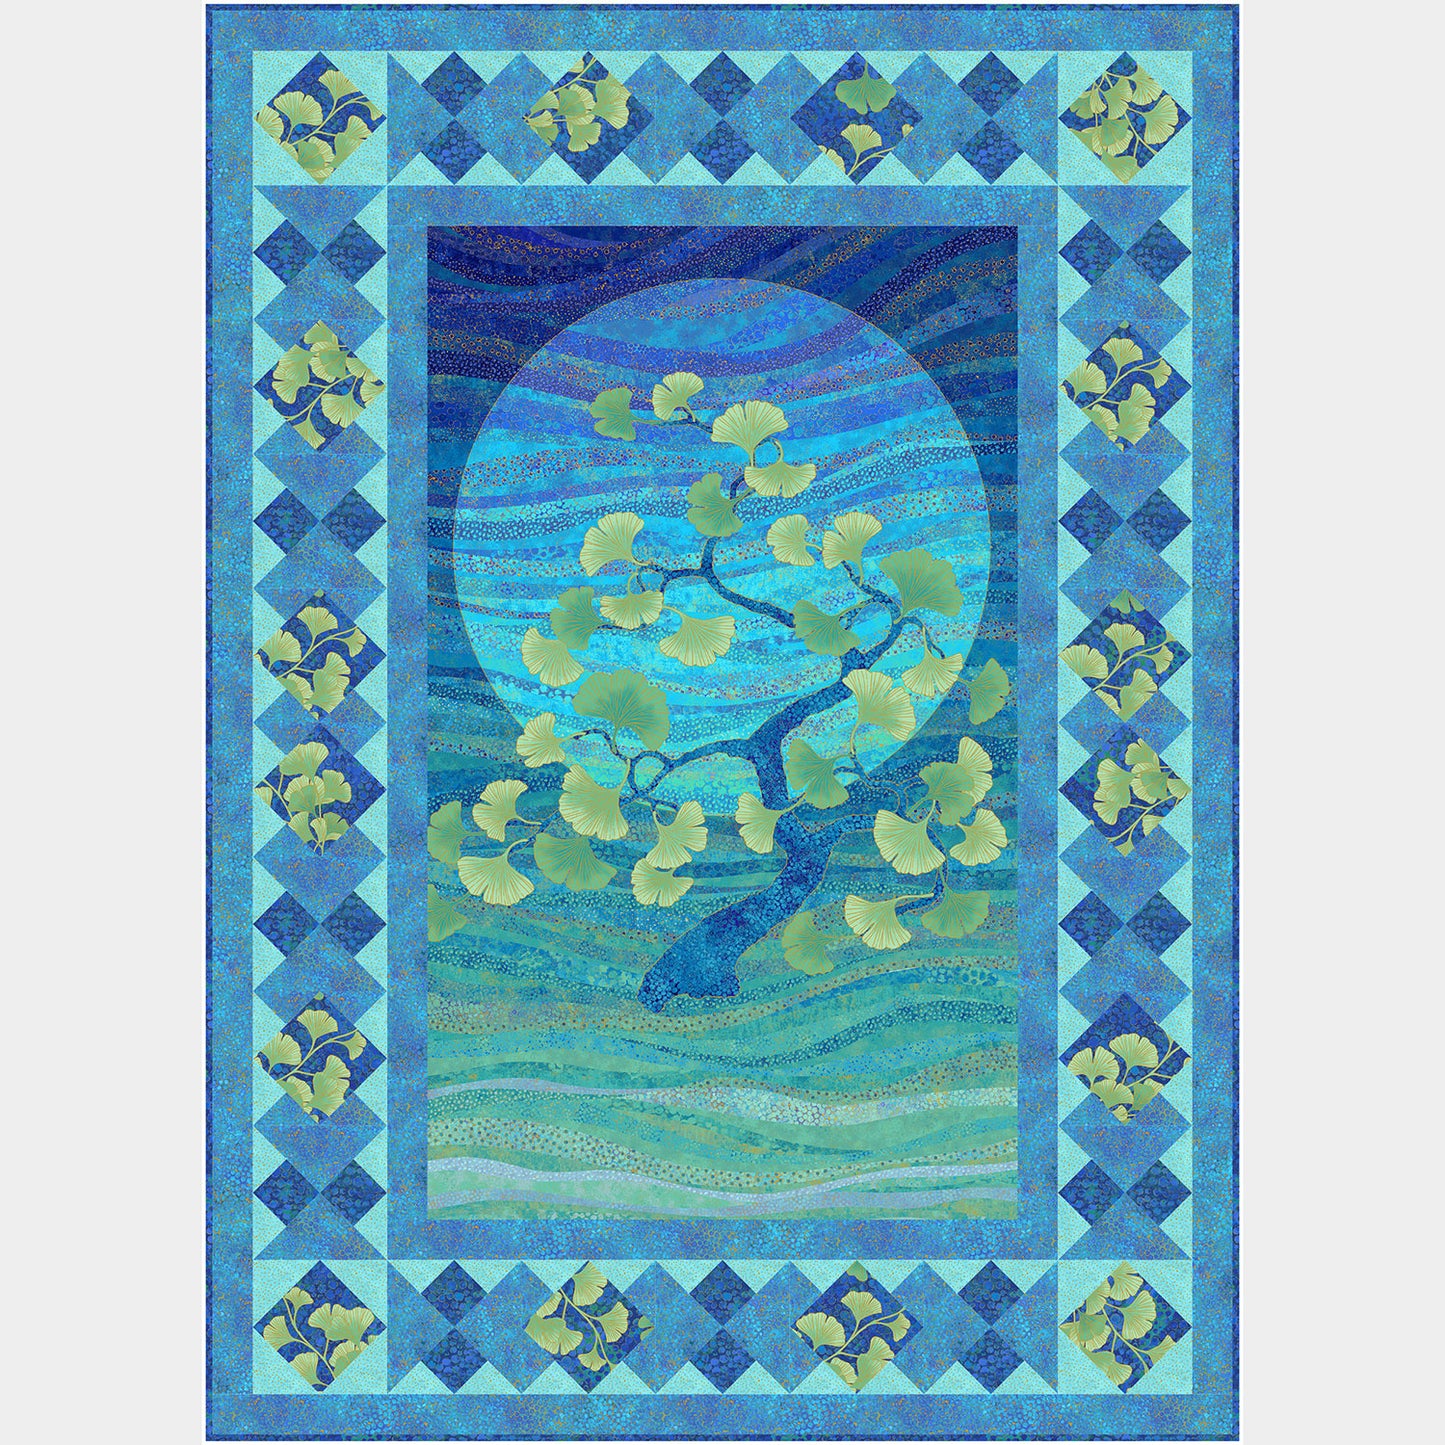 Mystic Moon Quilt Kit Primary Image